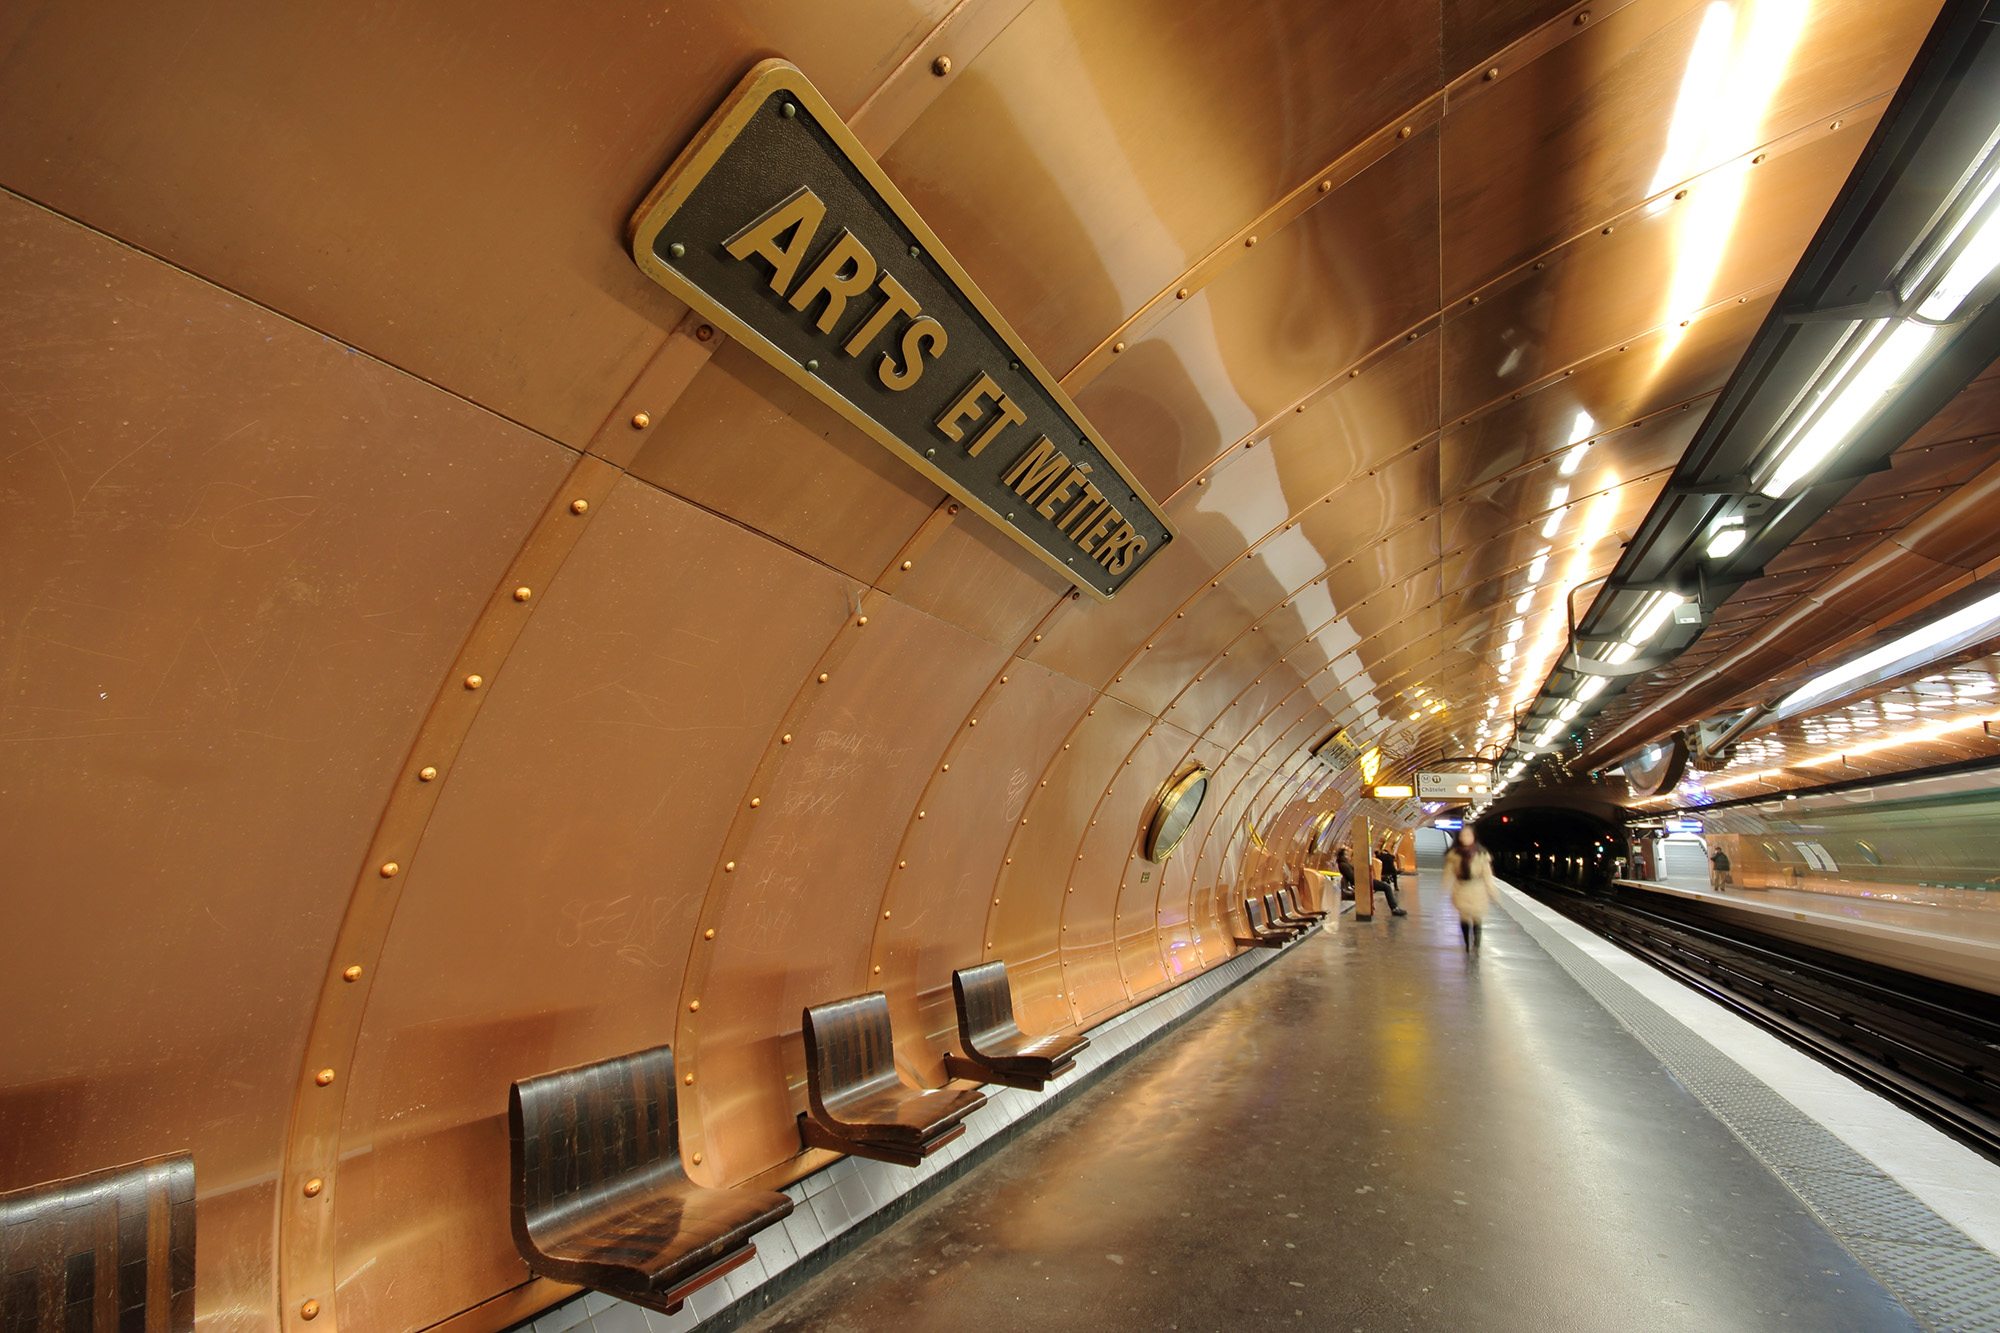 Включи популярную станцию. Станция метро Arts et metiers. Станция «Arts et metiers» Париж. Arts et métiers, Париж метро. Станция ар-э-Метье Париж Франция.